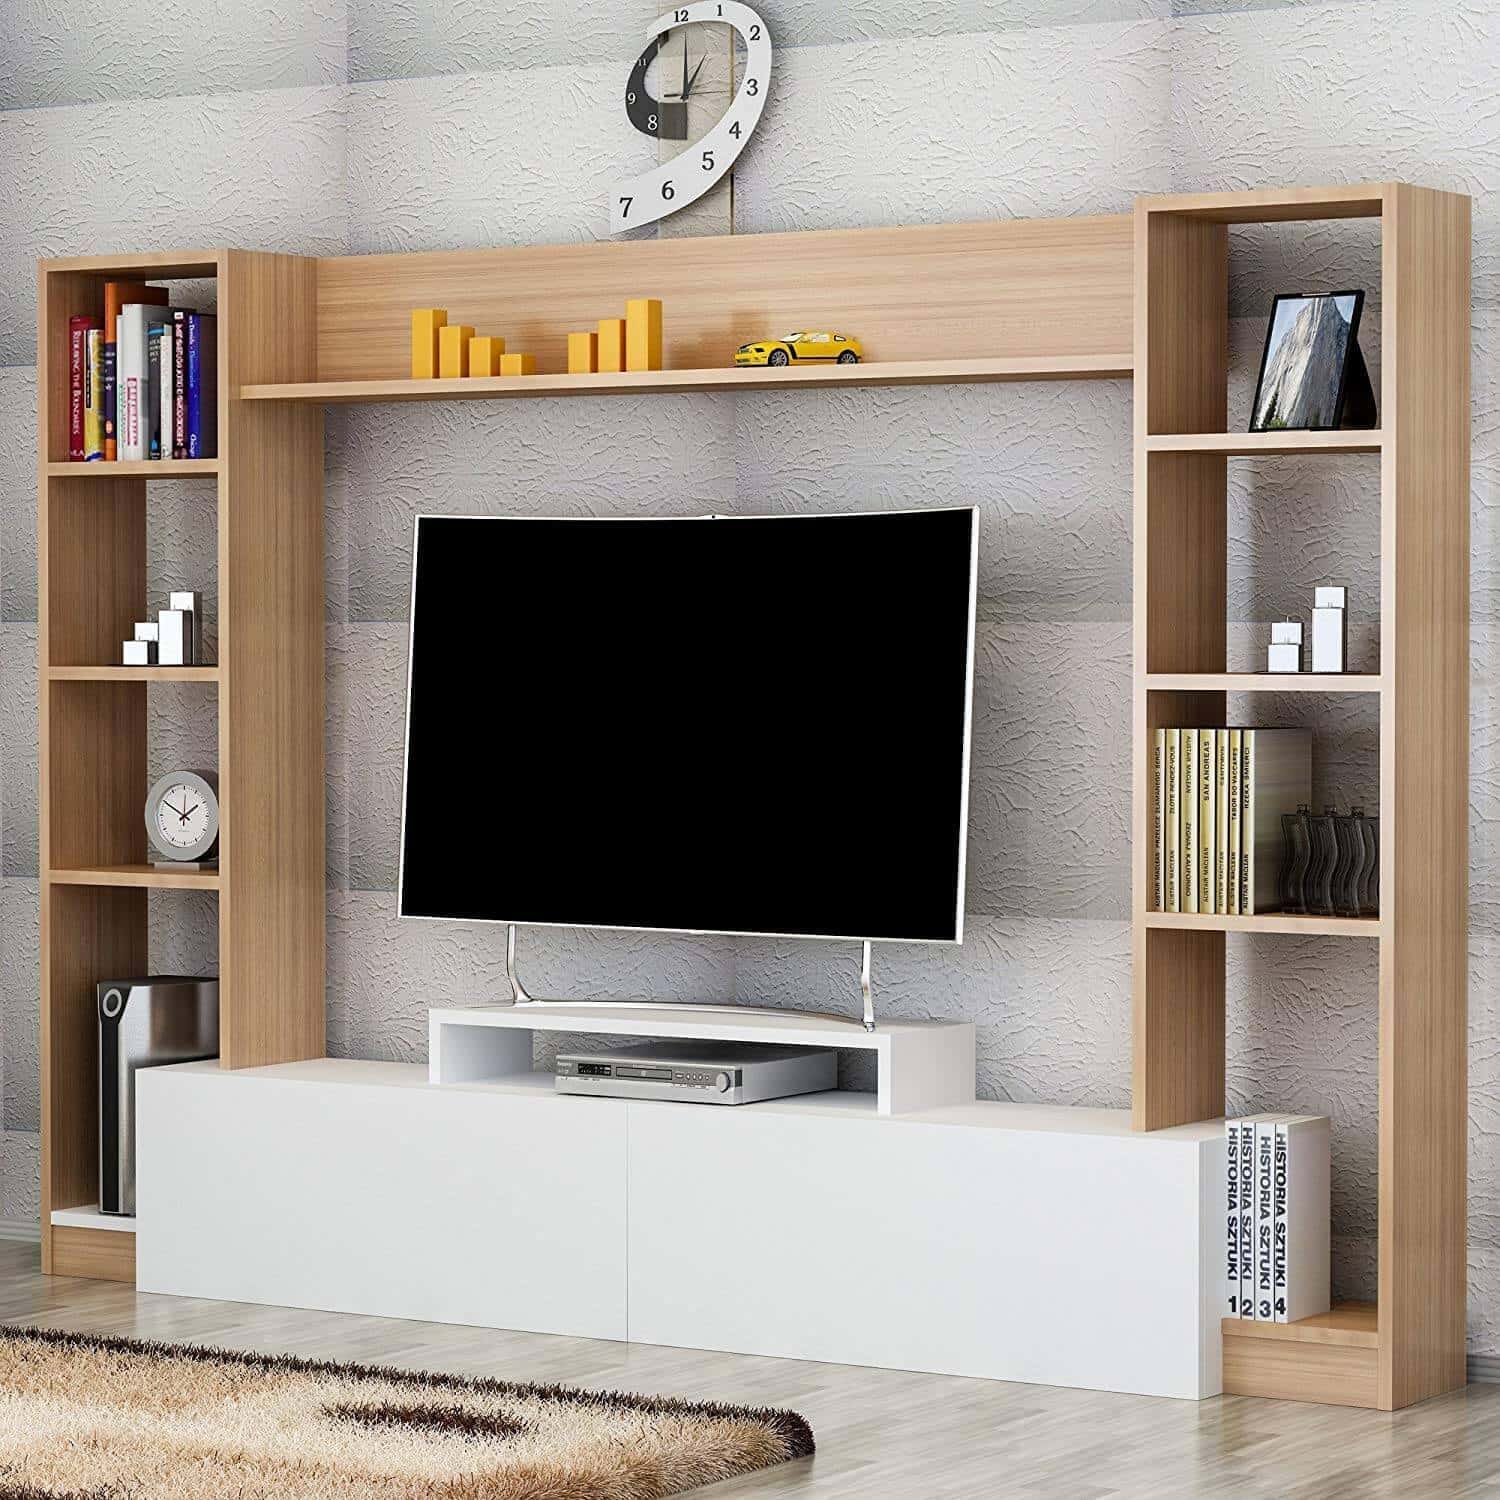 Modern and Contemporary Storage TV Unit Design Ideas